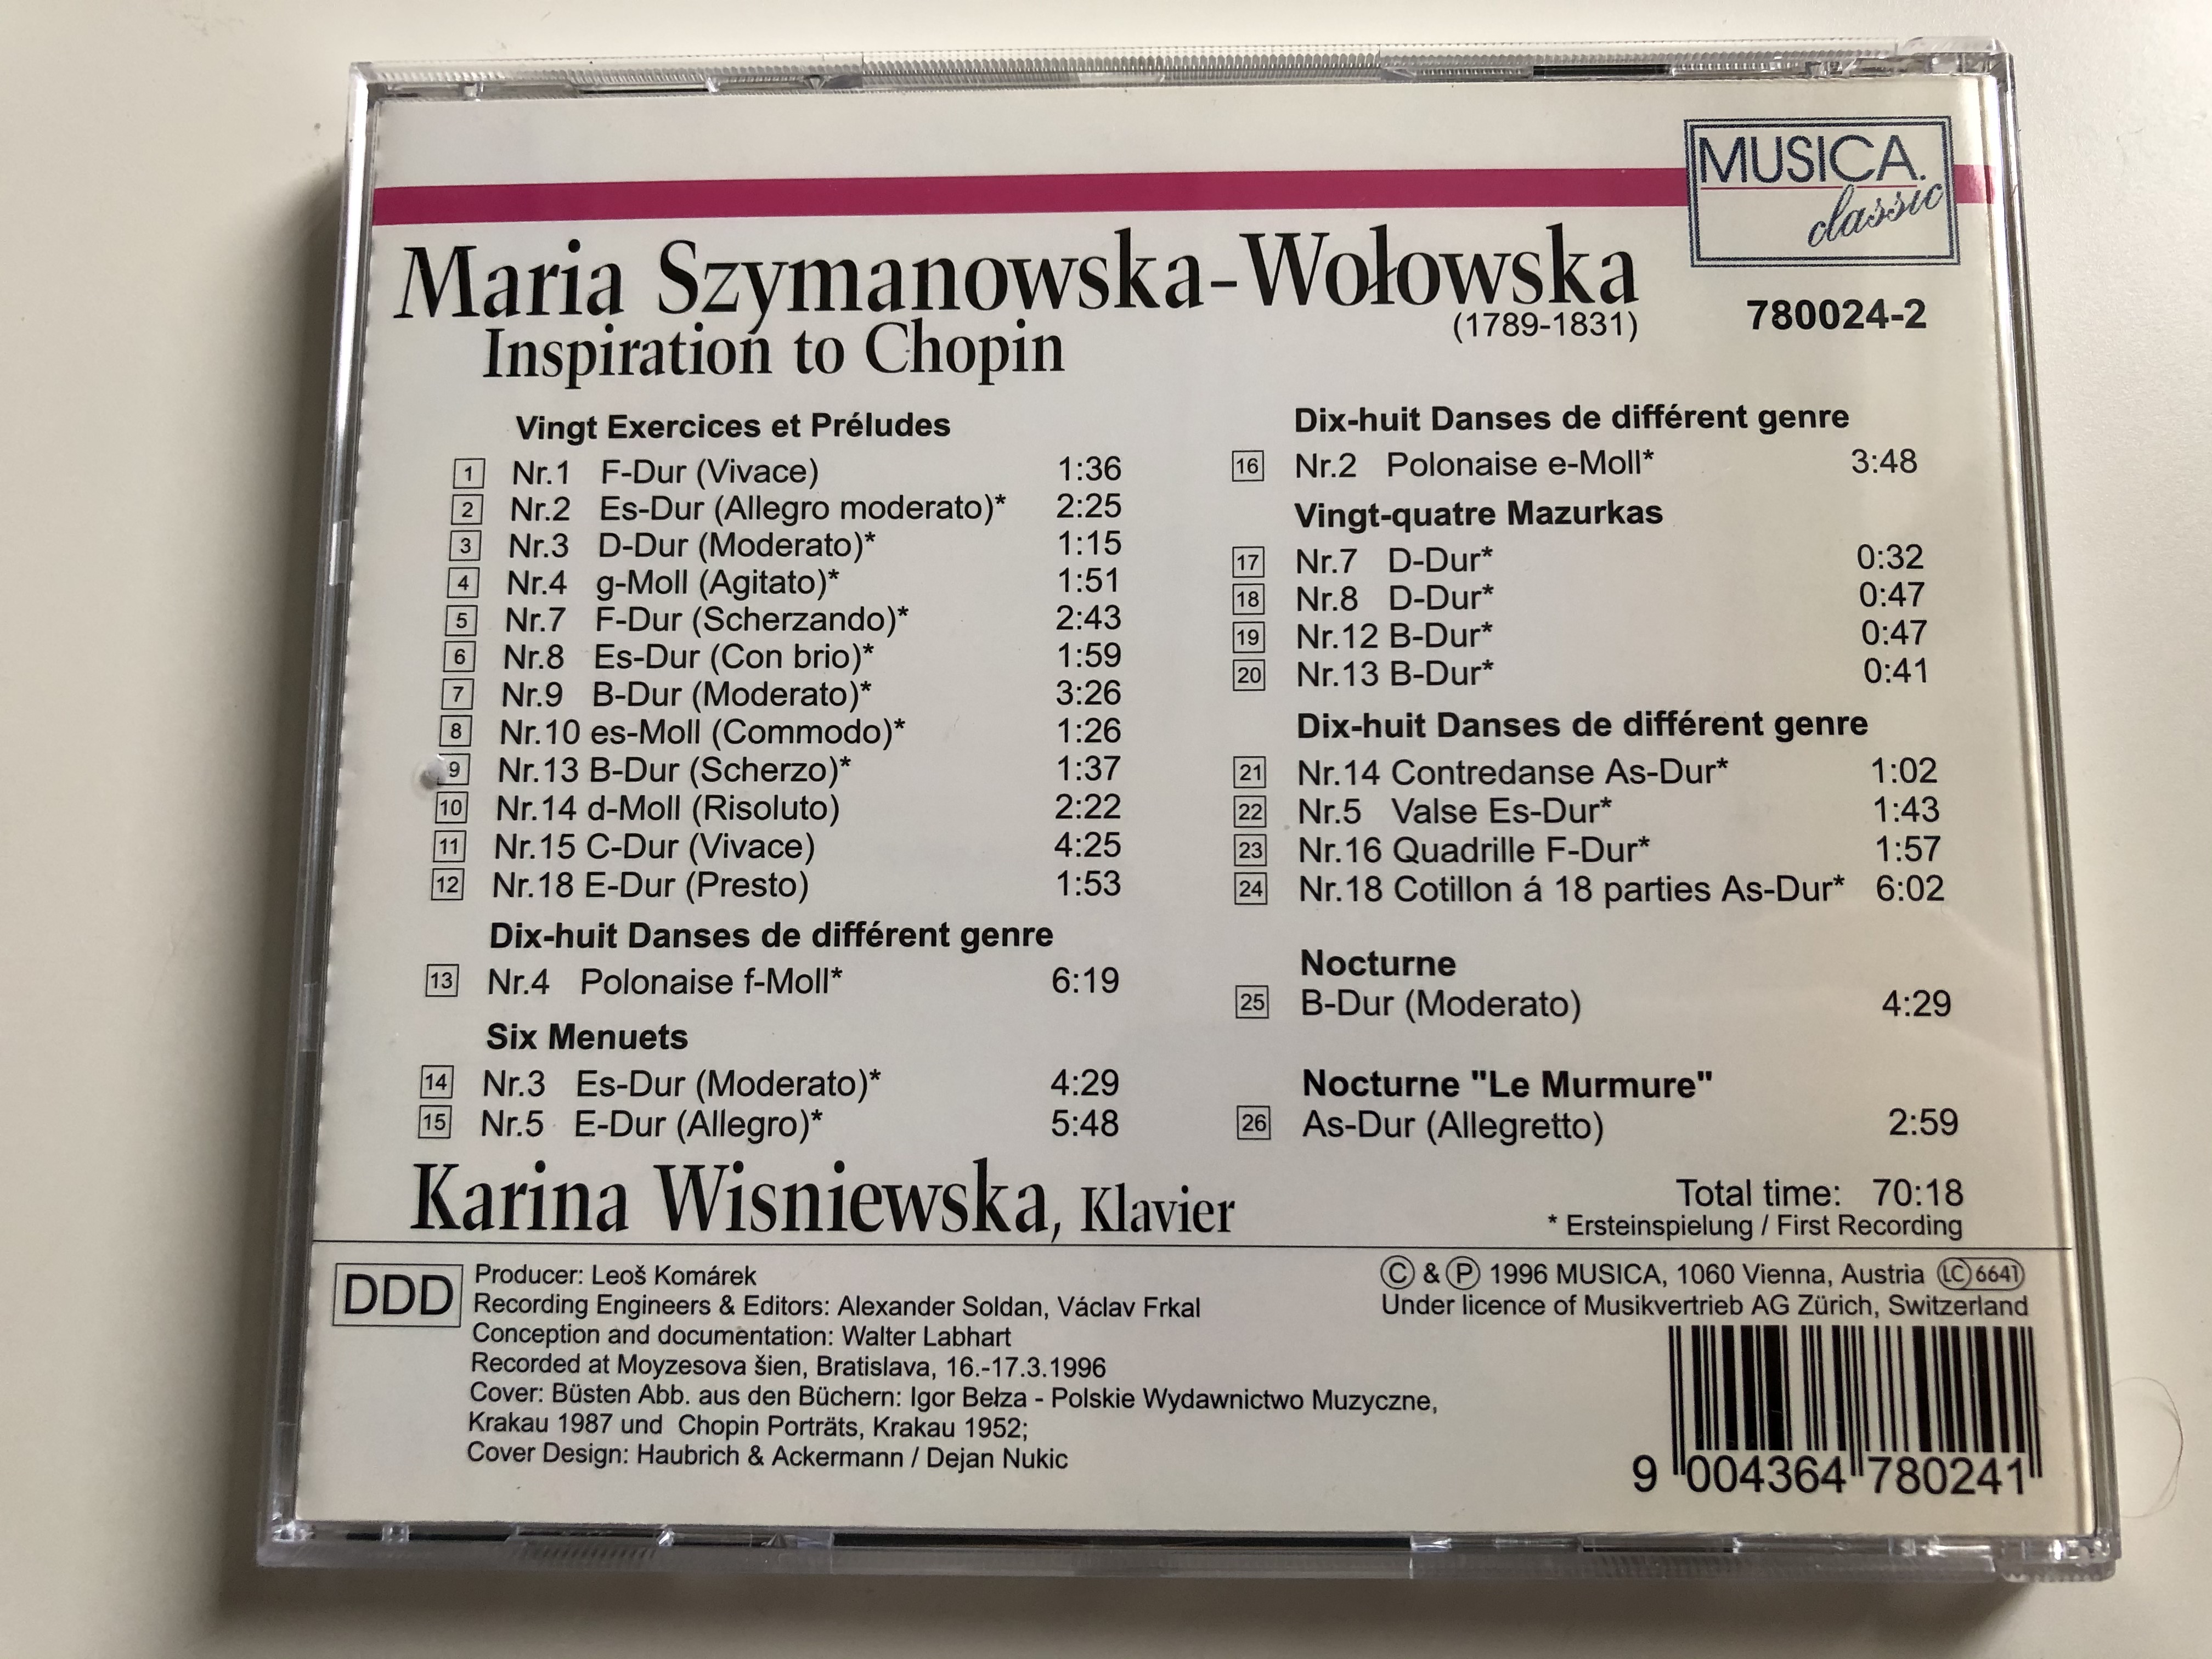 maria-szymanowska-wolowska-inspiration-to-chopin-klavier-karina-wisniewaska-musica-classic-audio-cd-1996-780024-2-7-.jpg